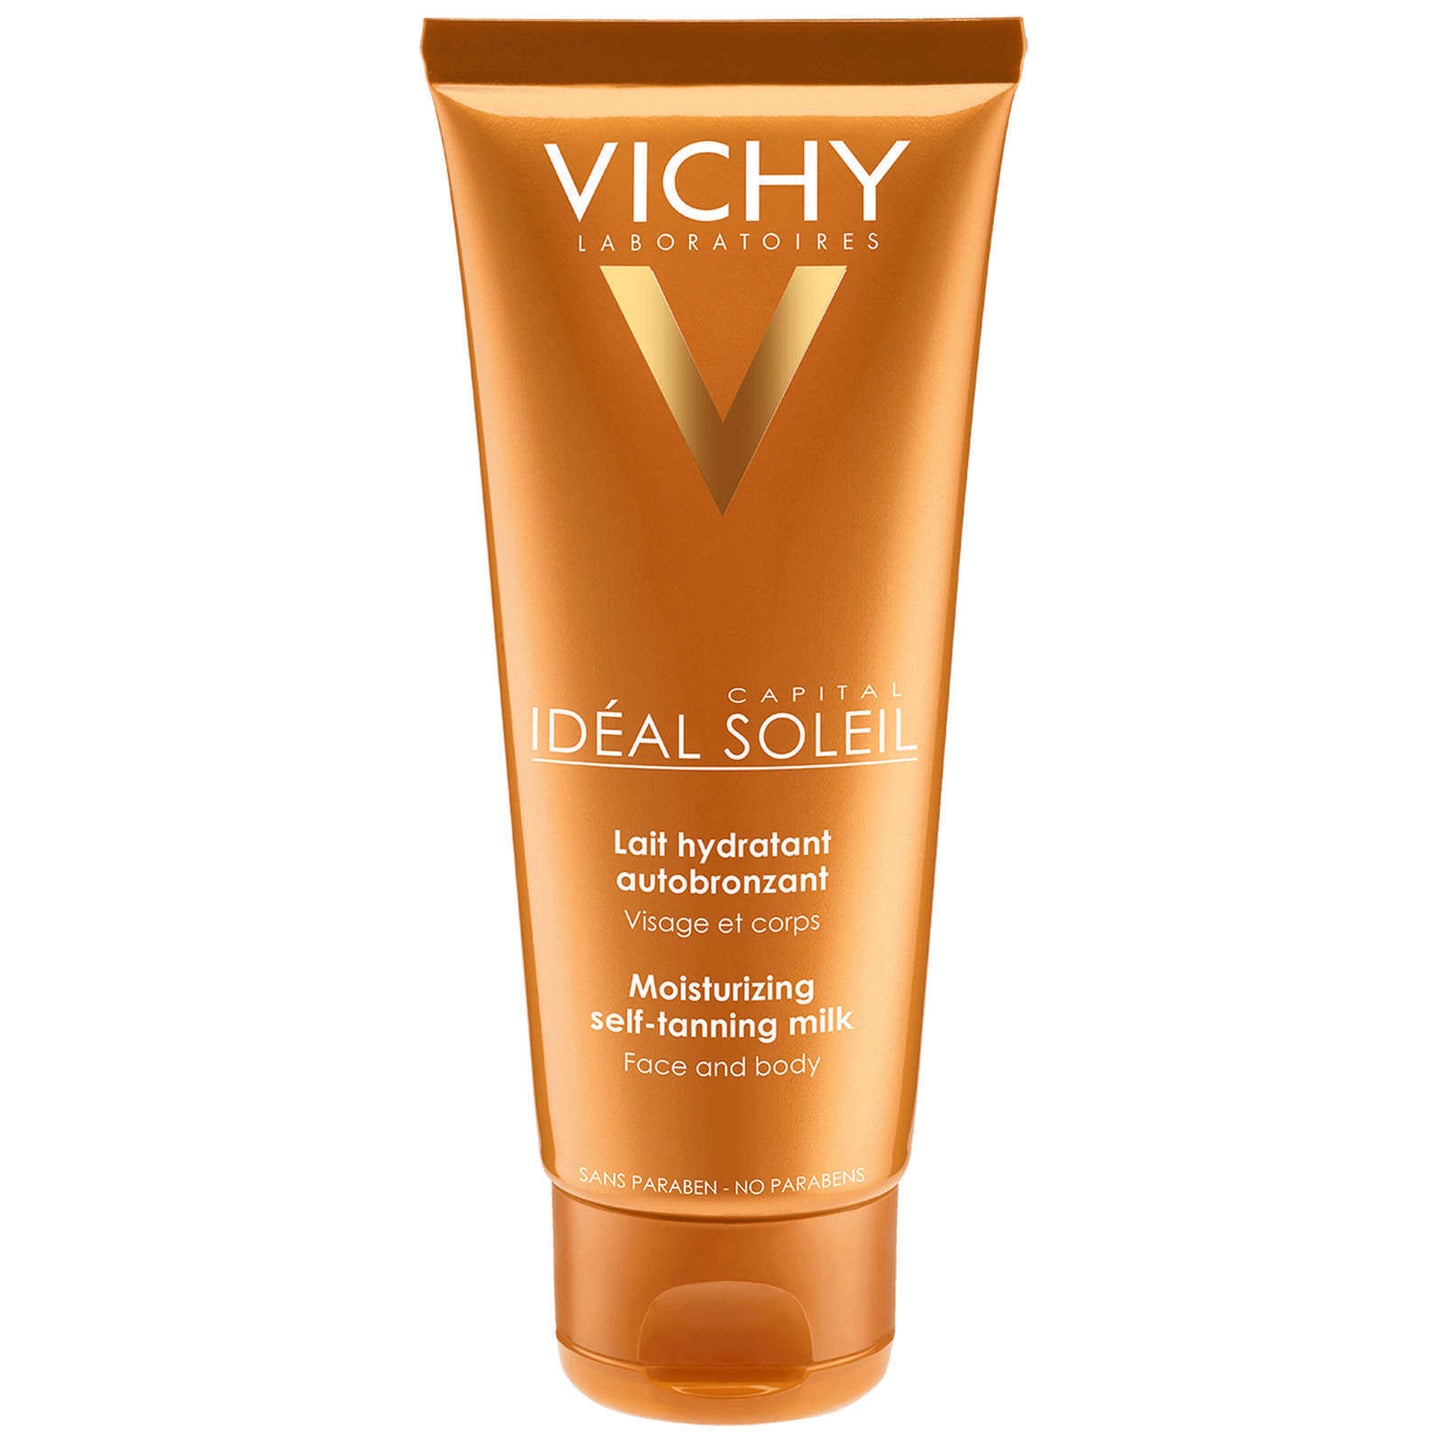 Vichy Ideal Soleil Self Tanner Face & Body Progressive Natural Tan 100ml NEW